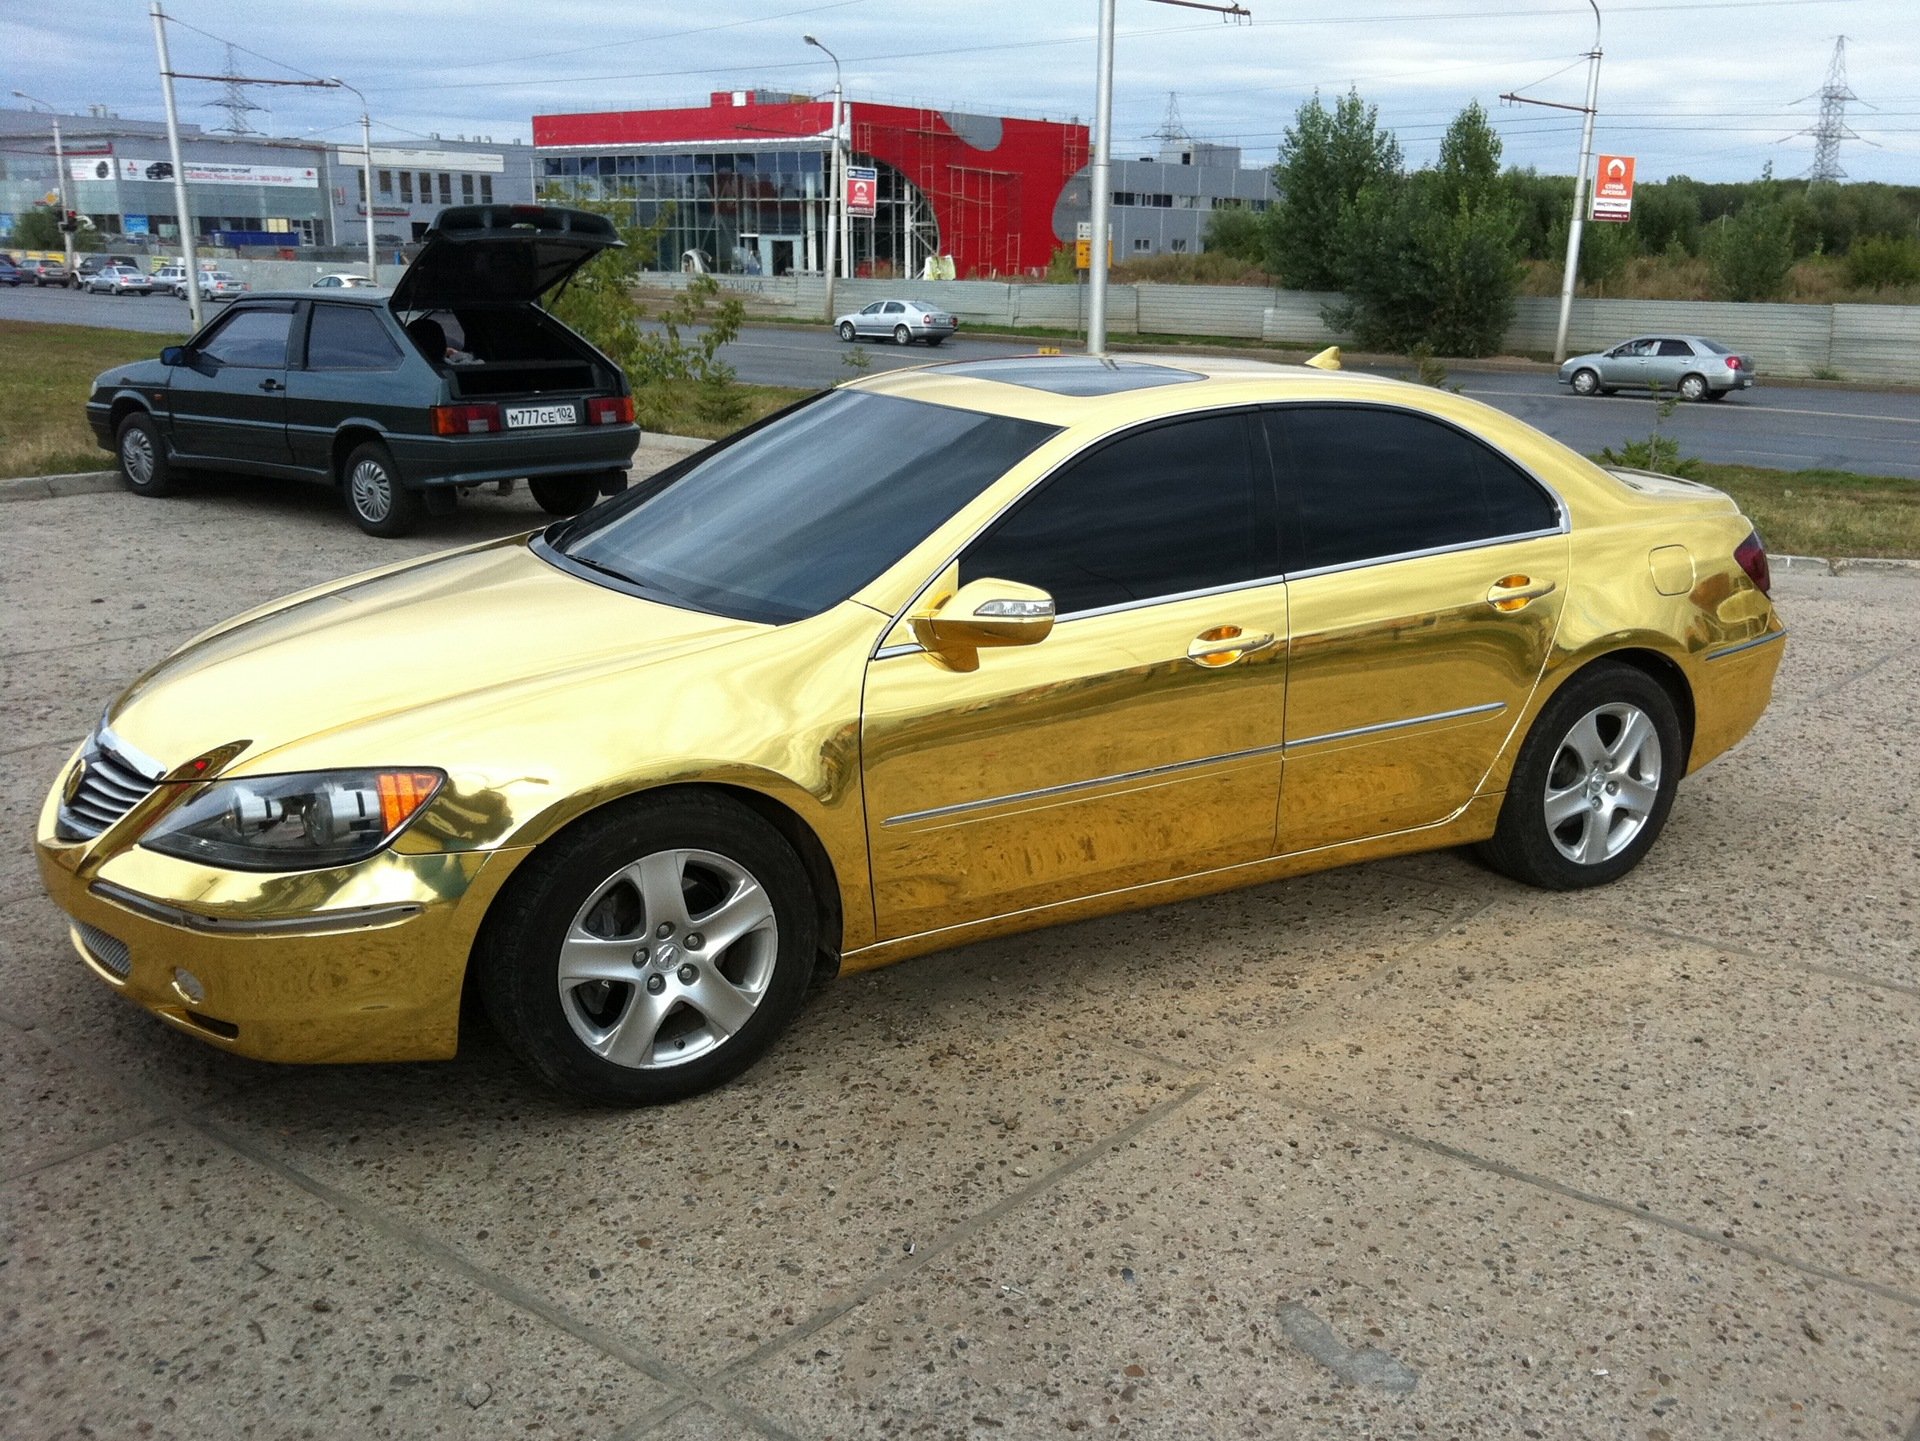 Gold машины. Rover 75 Золотая пленка. G35 Золотая пленка. Золотая машина. Машина золотого цвета.